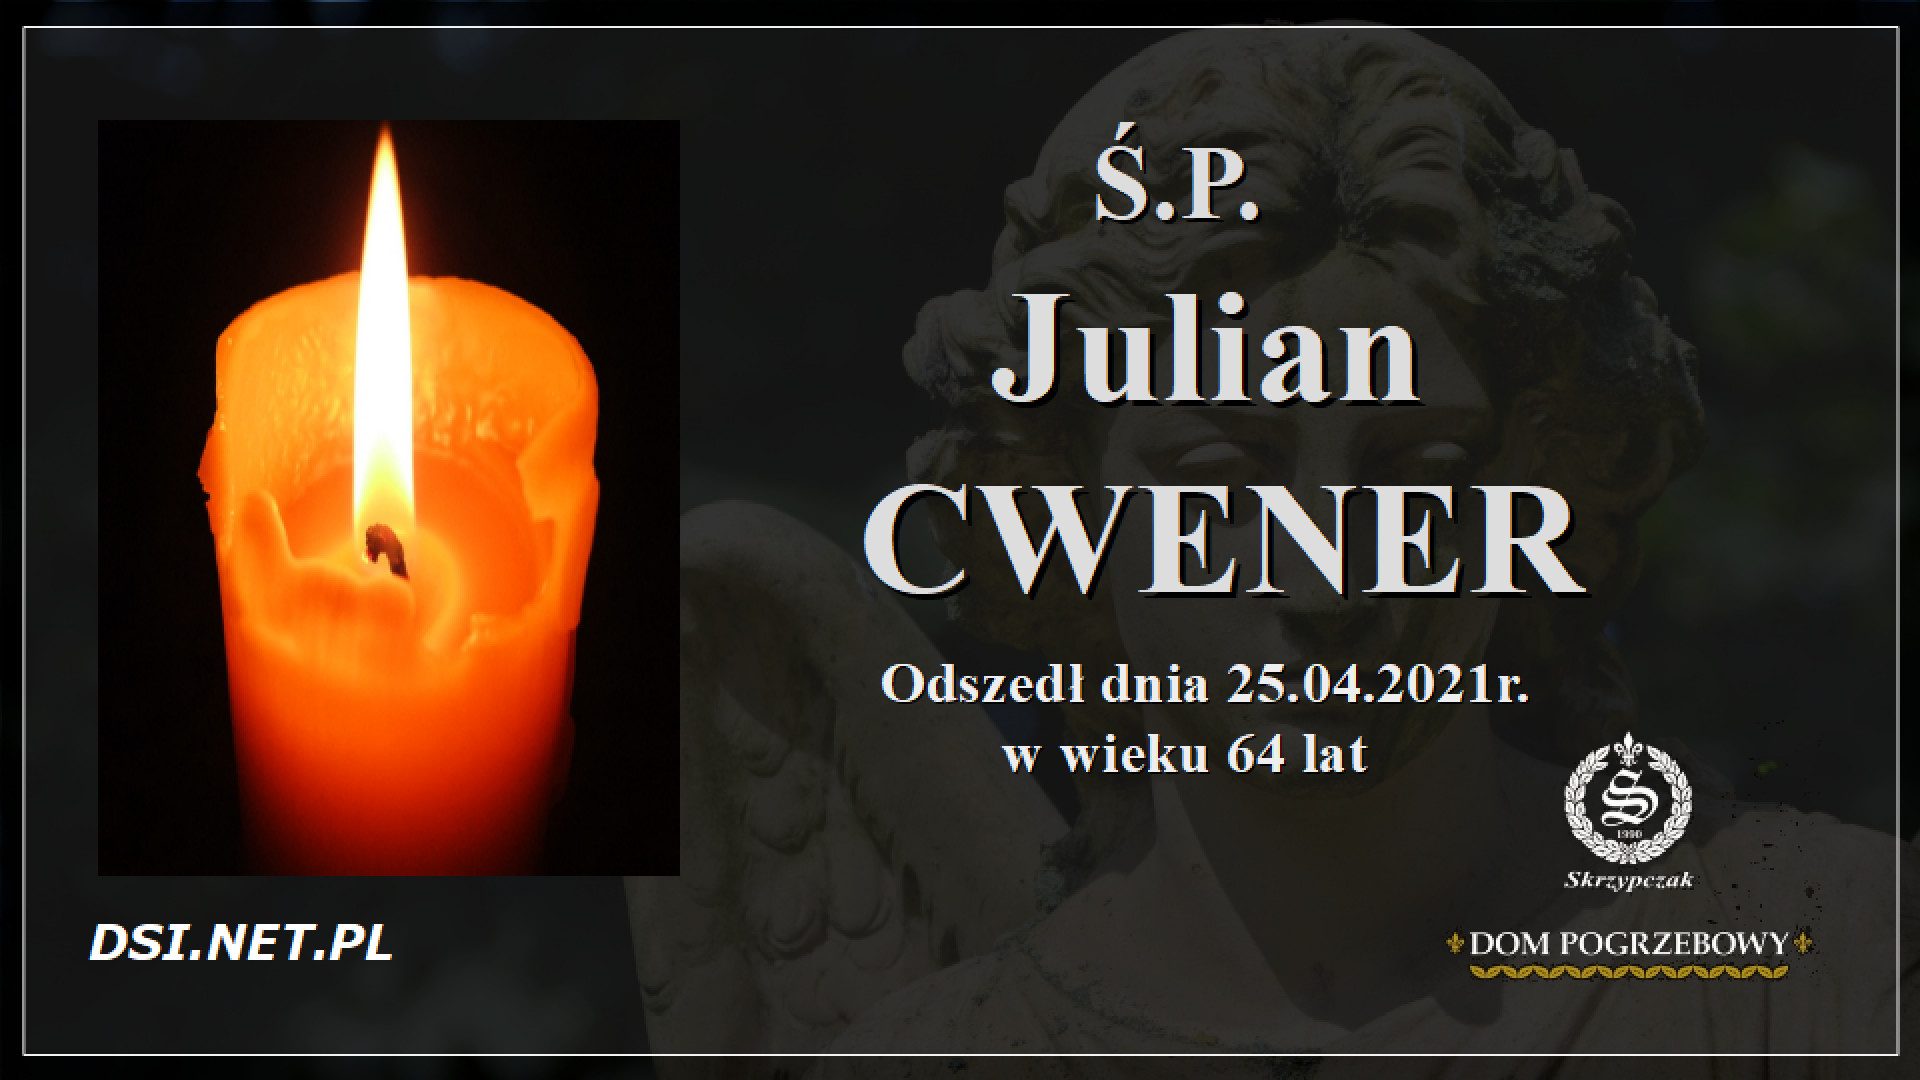 Ś.P. Julian Cwener